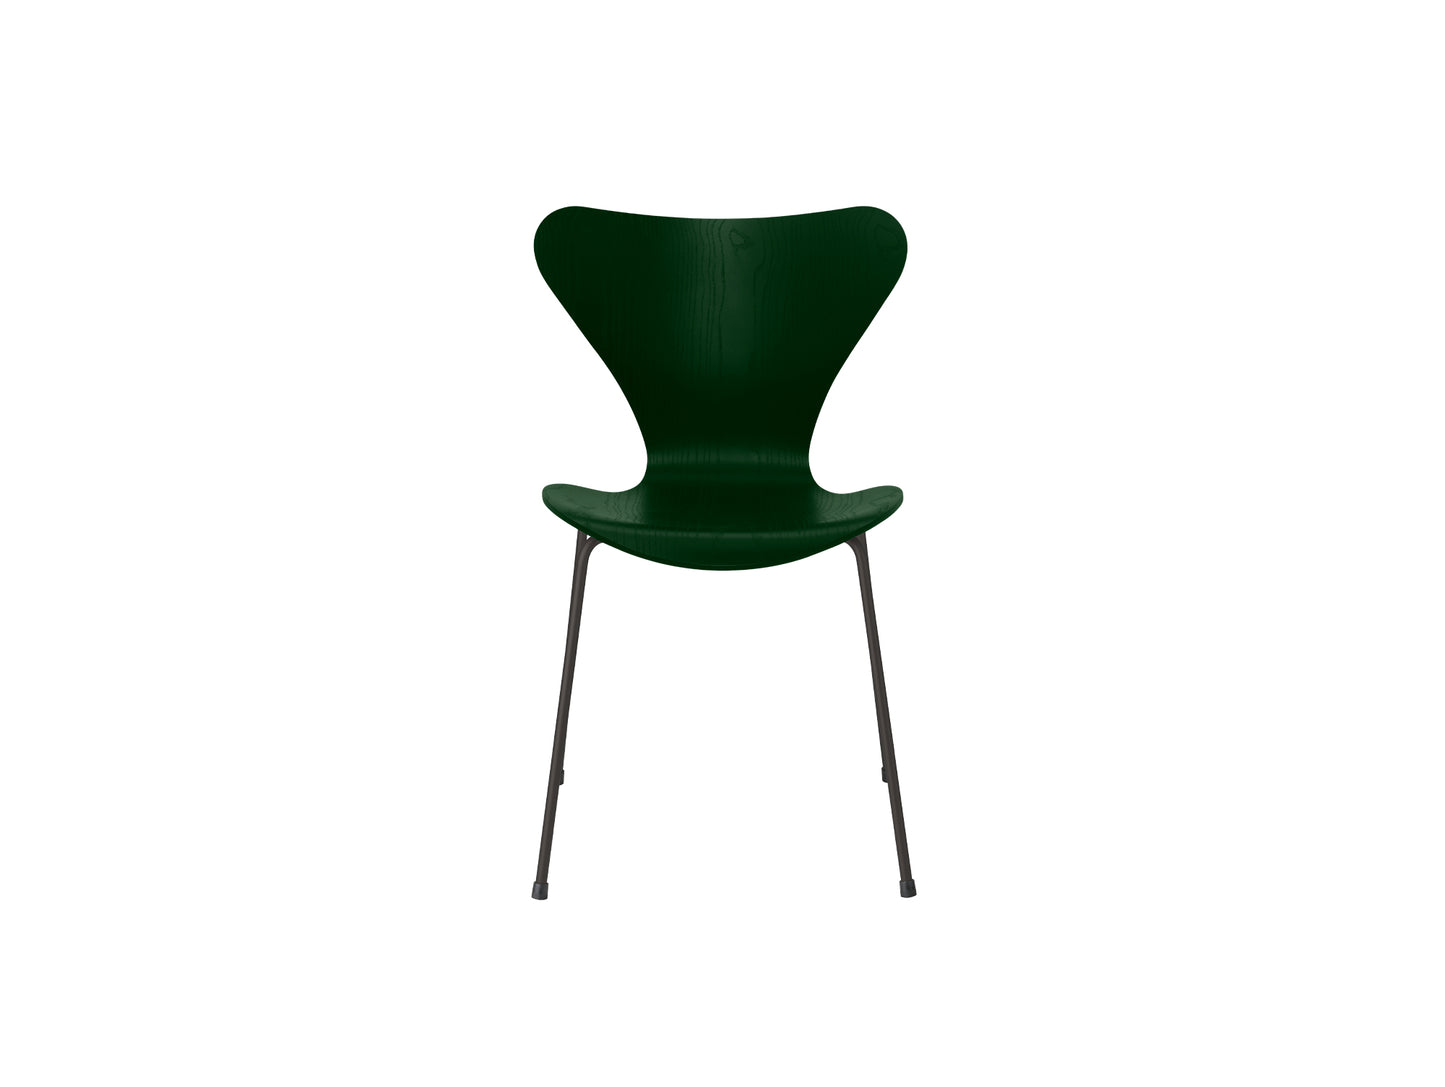 Series 7™ 3107 Dining Chair by Fritz Hansen - Evergreen Coloured Ash Veneer Shell / Warm Graphite Steel